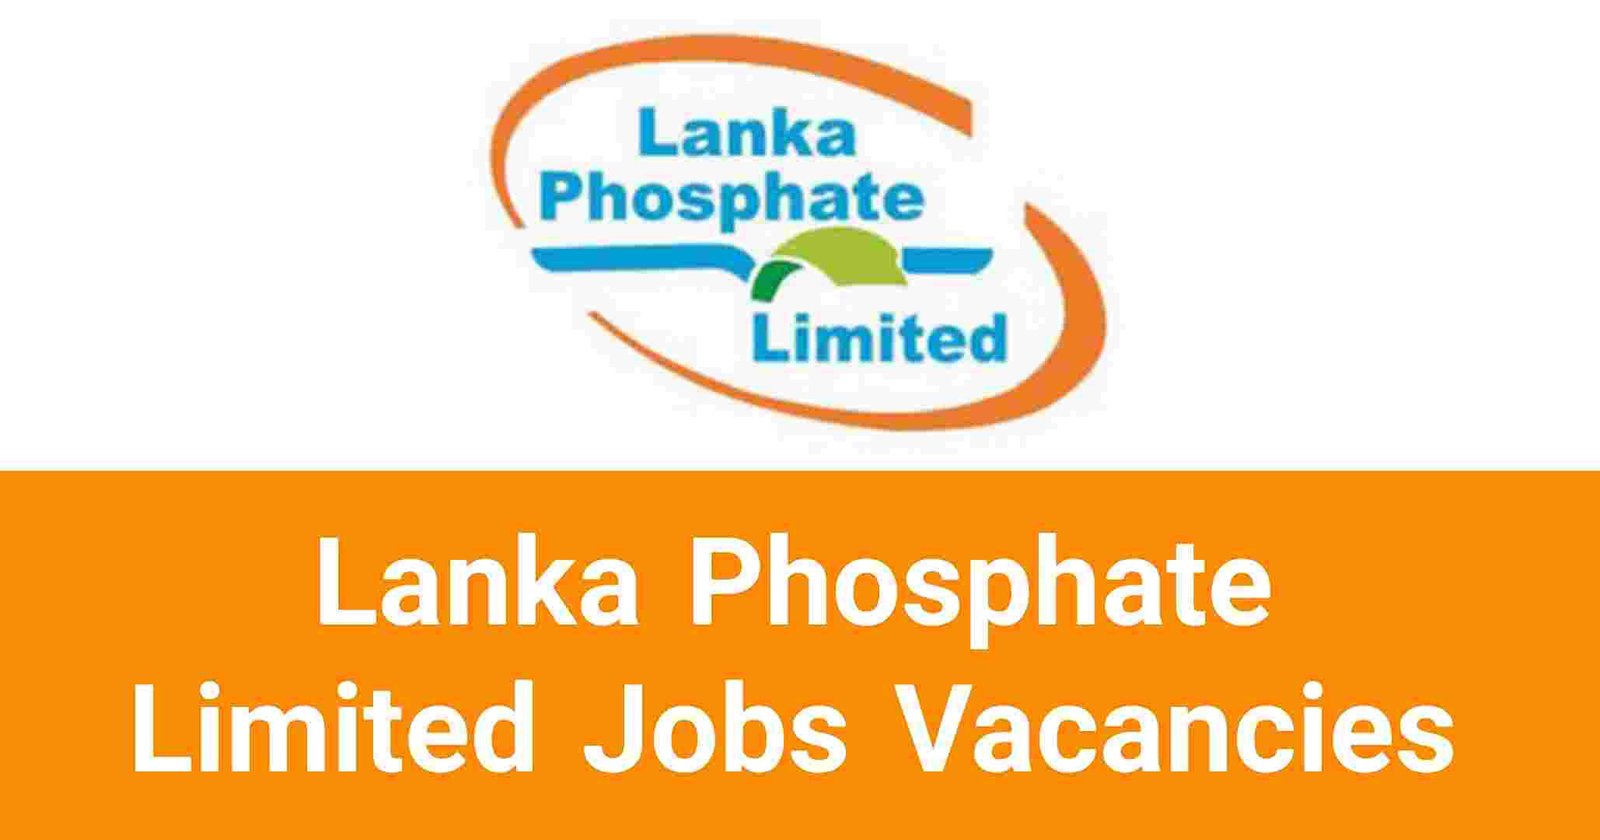 Lanka Phosphate Limited Jobs Vacancies